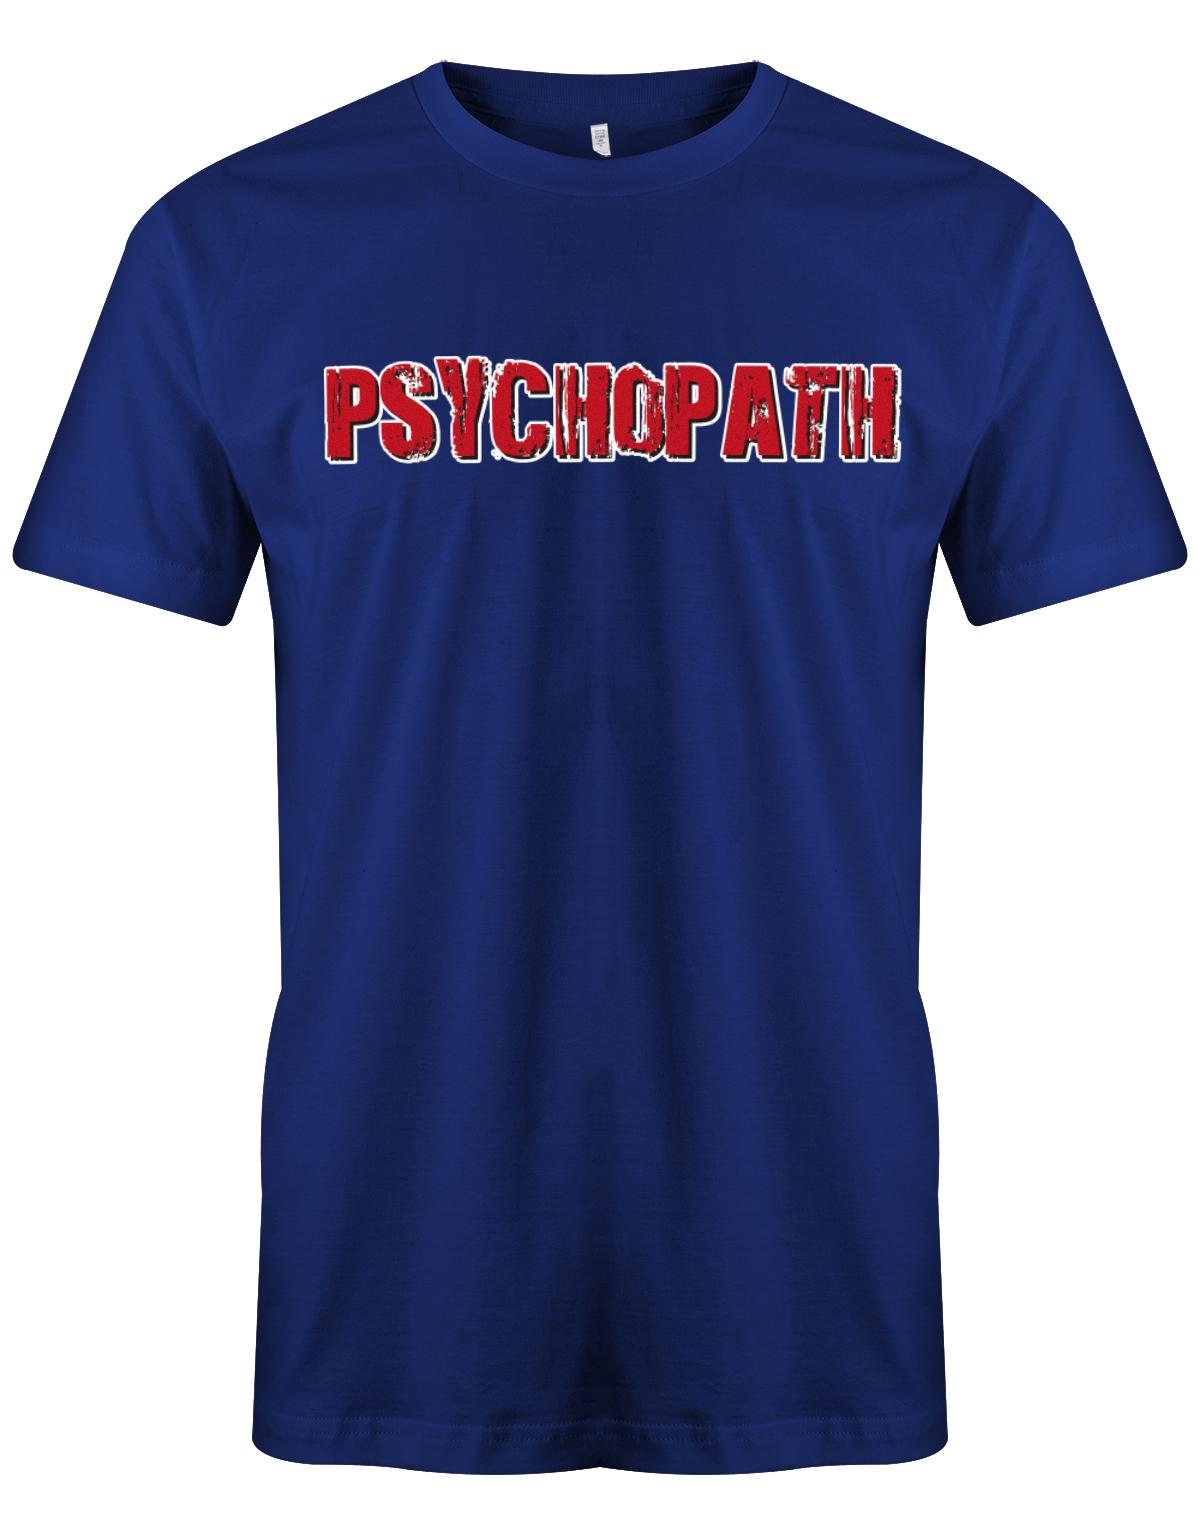 Psychopath-Kost-m-Shirt-Herren-Royalblau